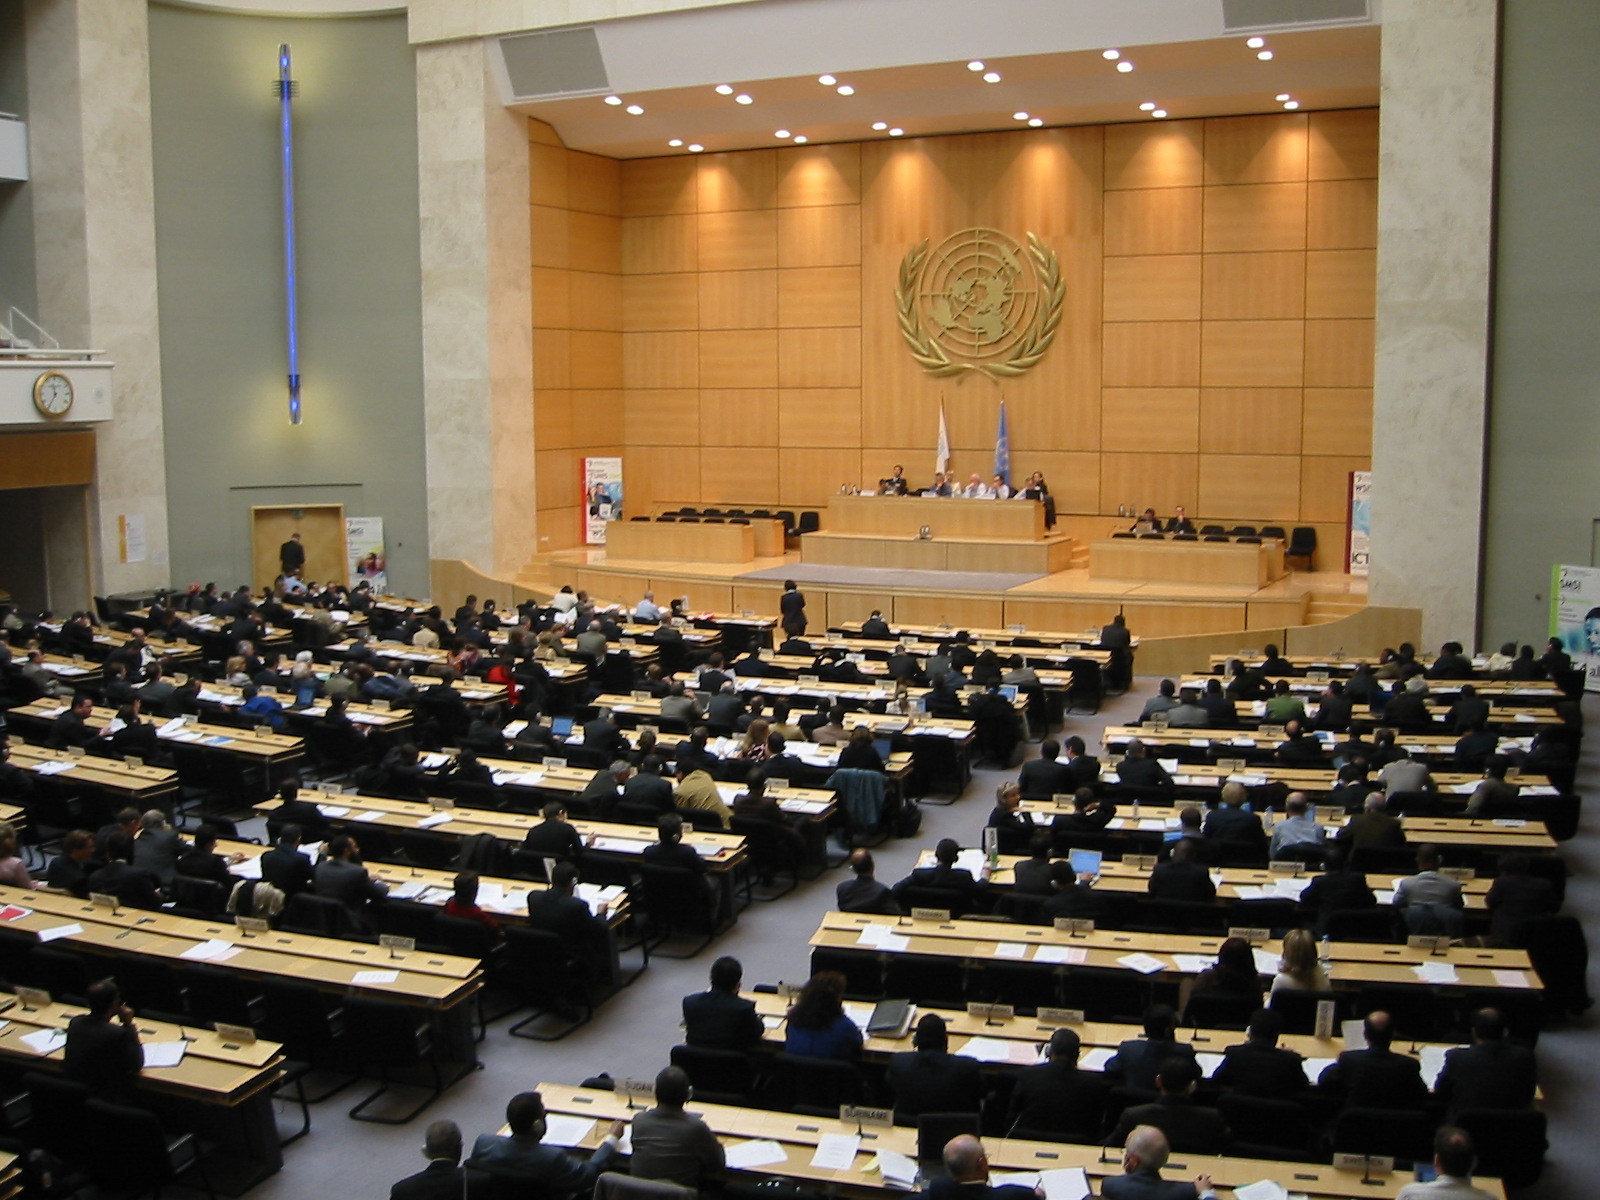 Зал оон. Зал ООН В Женеве. Залы ООН Женева дворец наций. Секретариат ООН зал. Женева дворец наций ЕСПЧ.